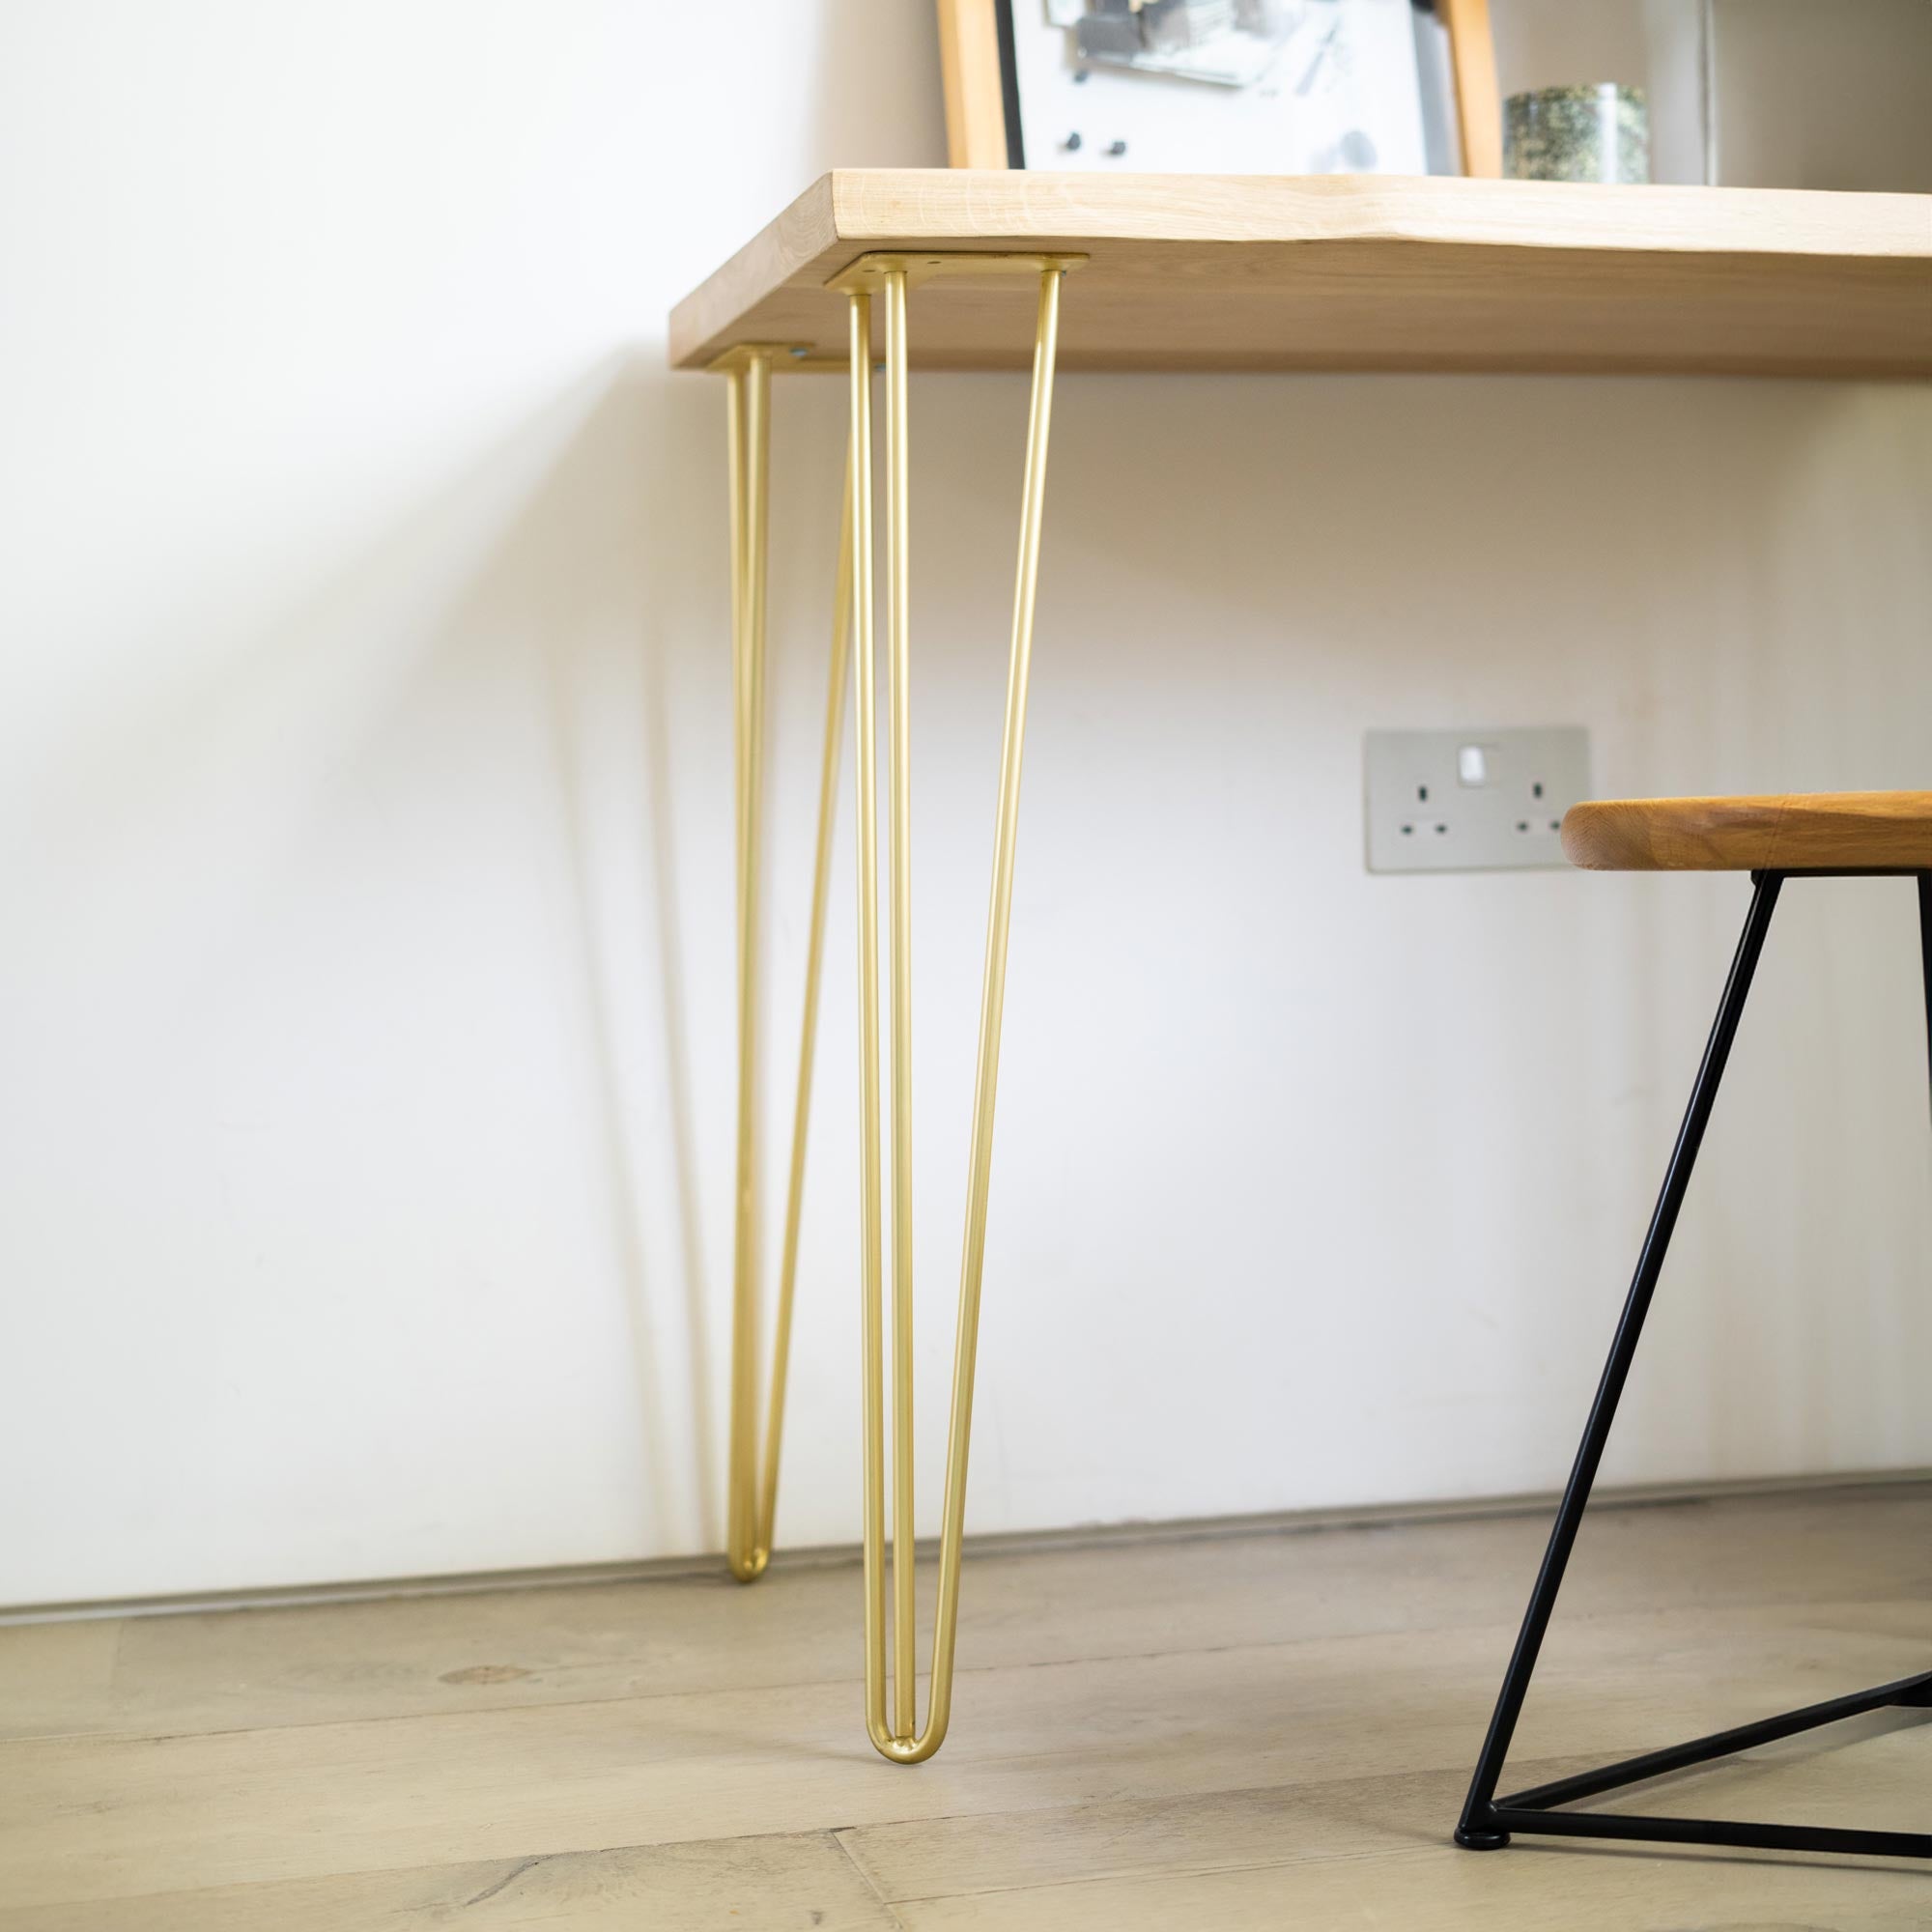 Satin Brass Hairpin Legs-28" / 71cm - Desk & Dining Table-3 Rod-The Hairpin Leg Co.